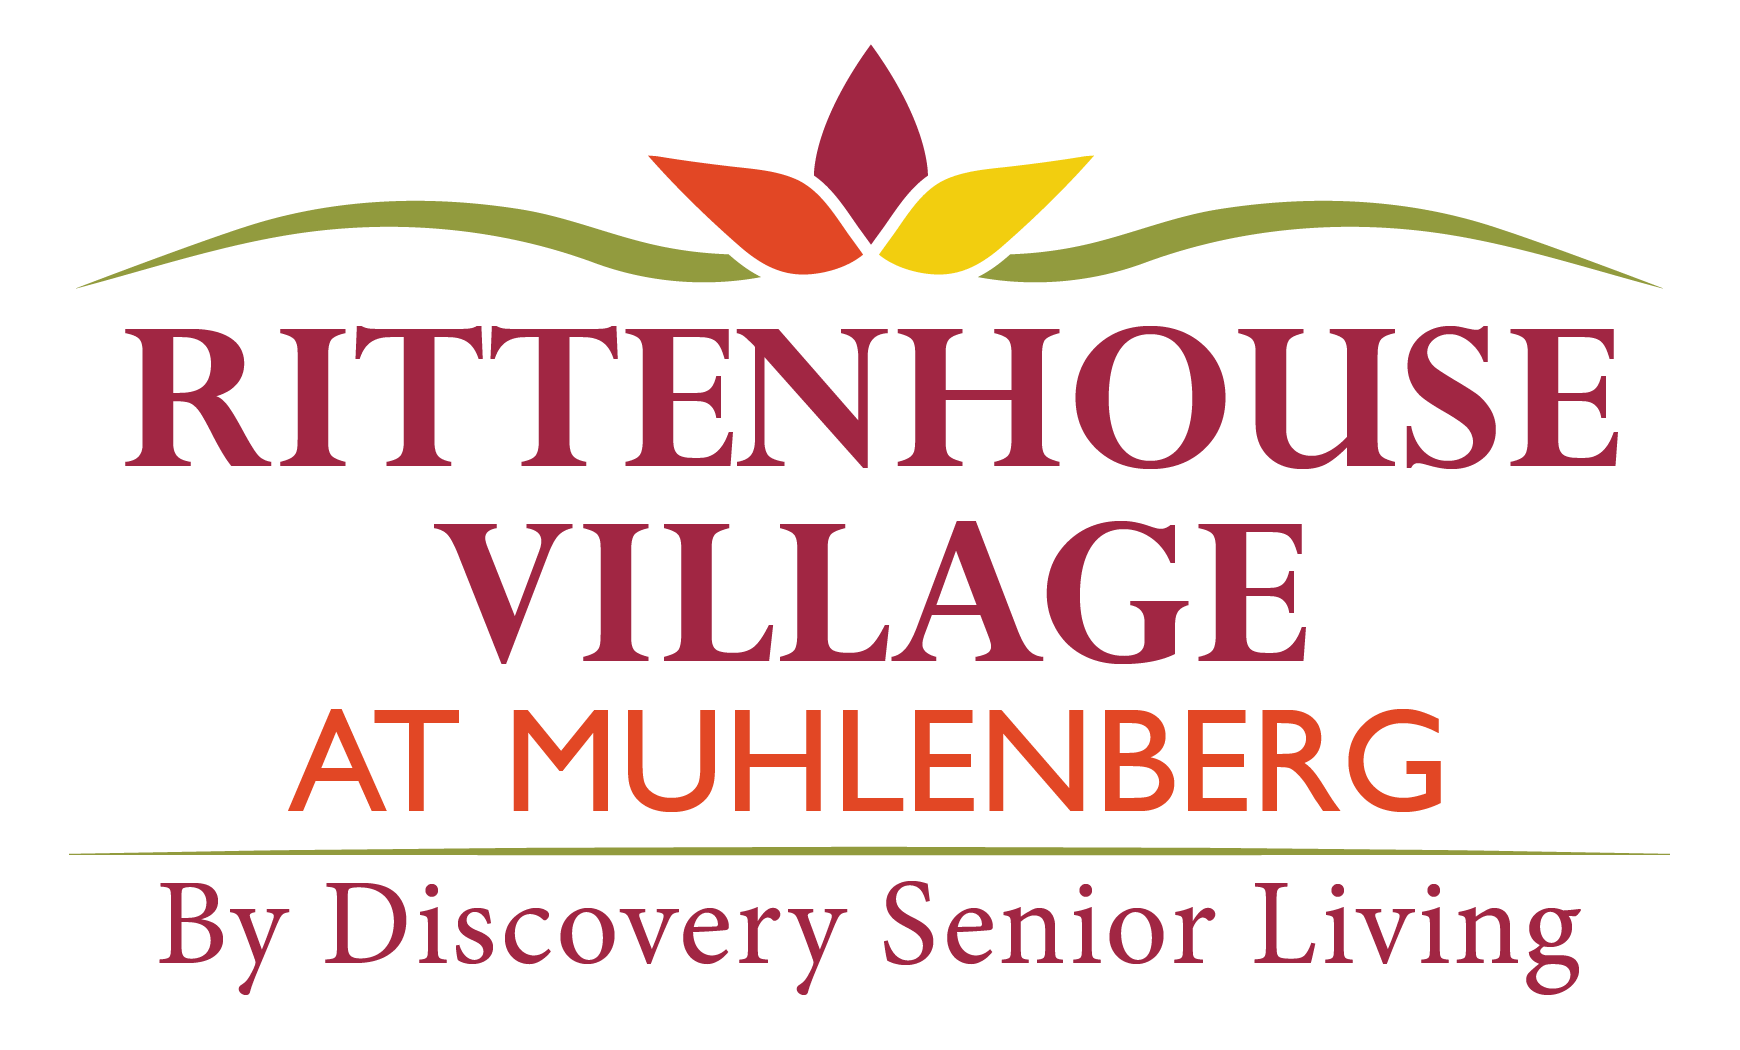 Rittenhouse Village Rittenhouse village at muhlenberg